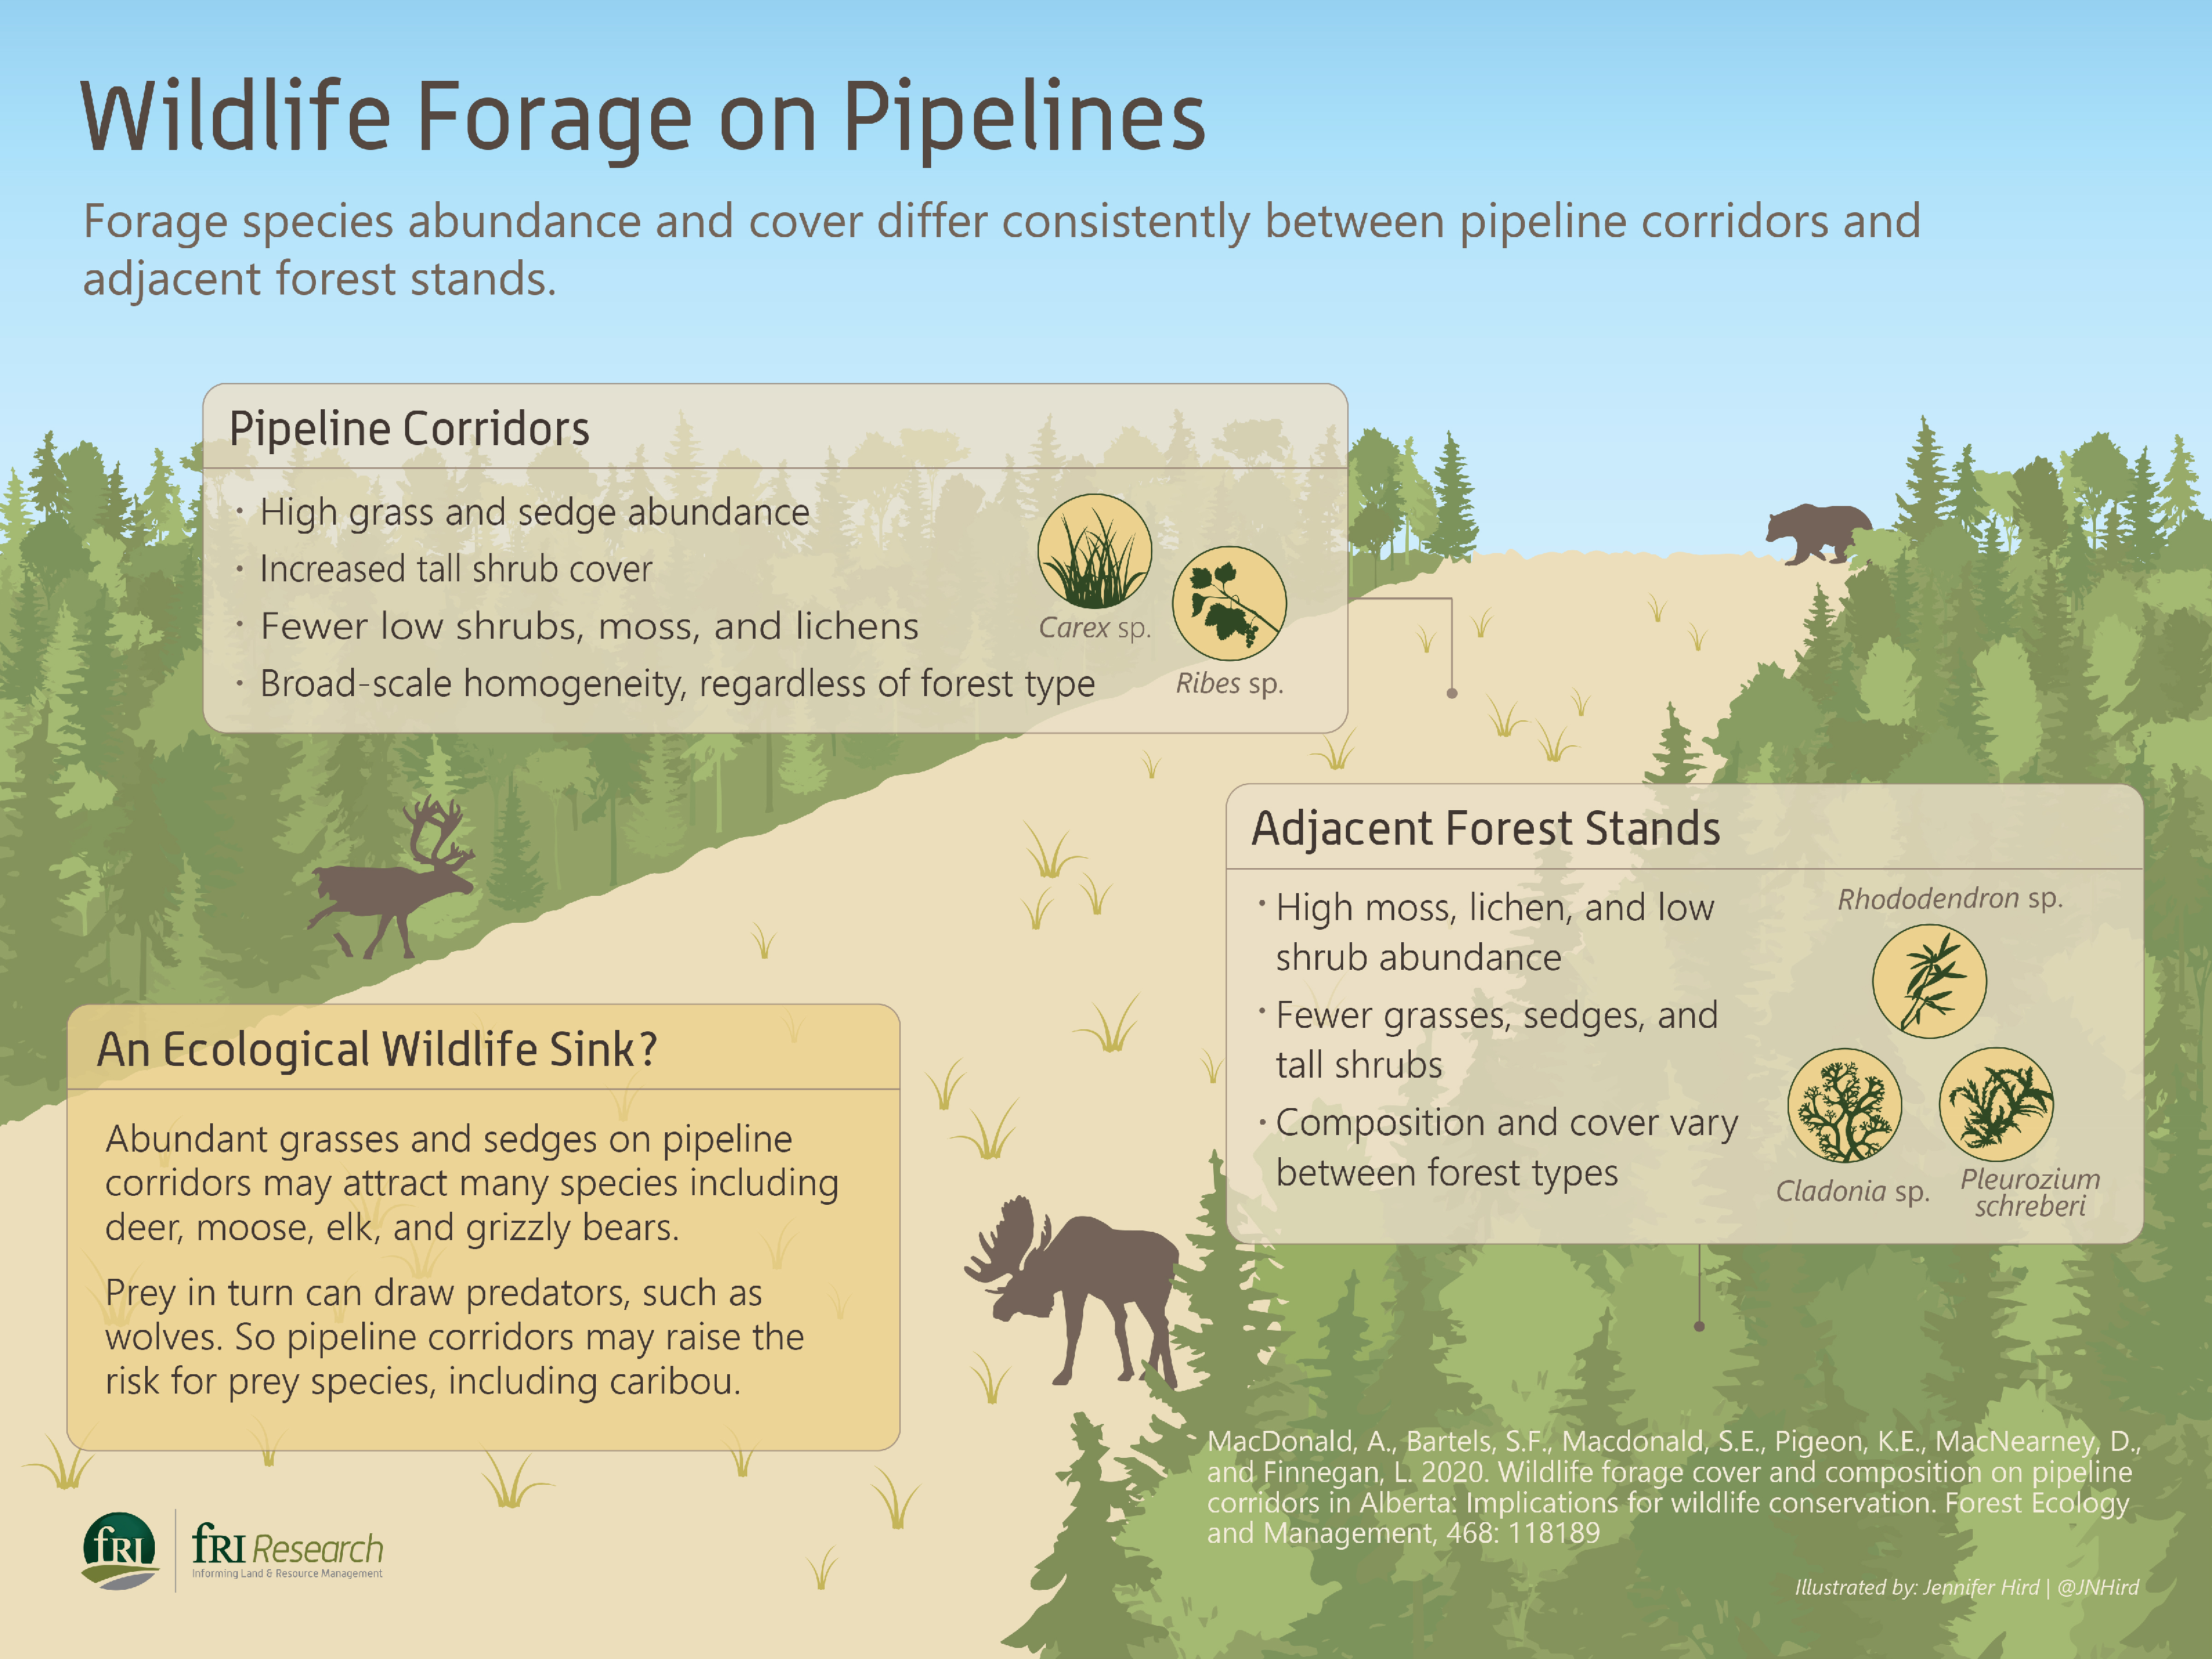 Wildlife forage on pipelines